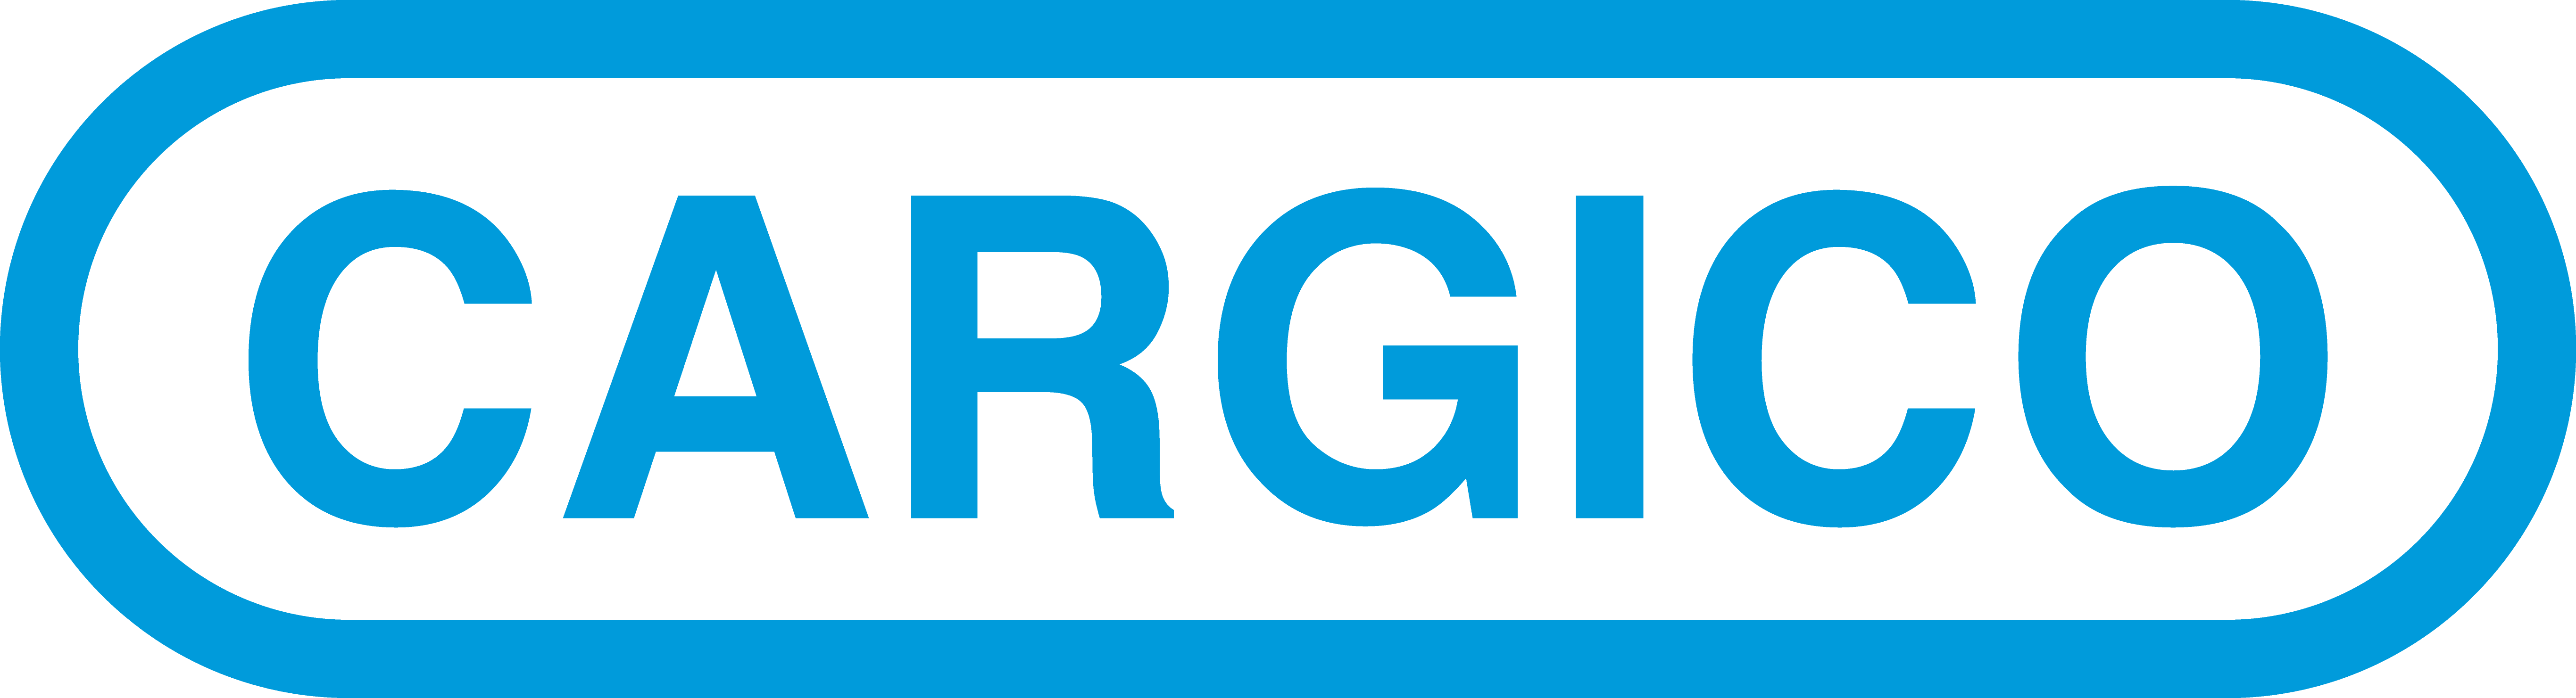 cargico logo pantone blue.png